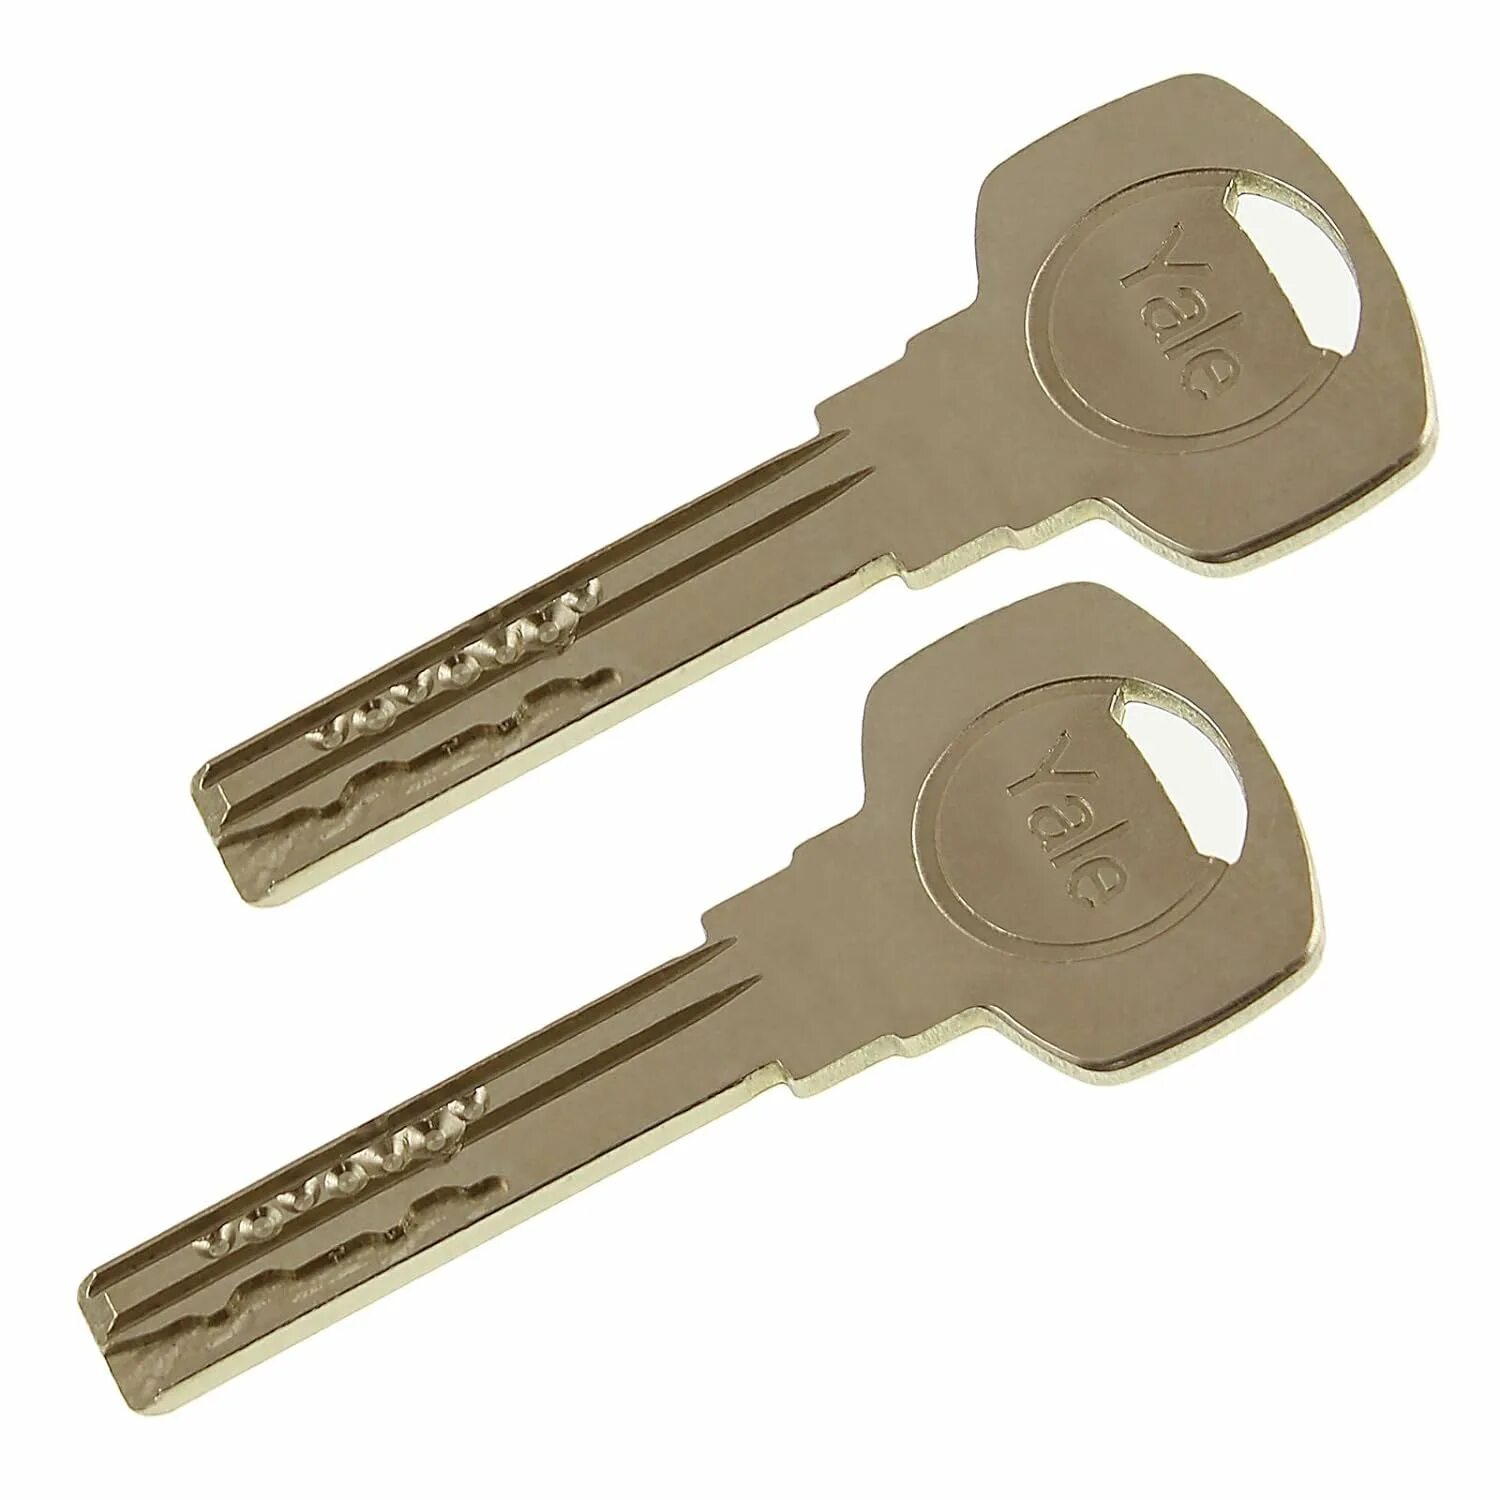 Extra keys. Заготовка ключа u5d_dam1. Ключи Steel. Ключ Yale. Платиновый ключ.